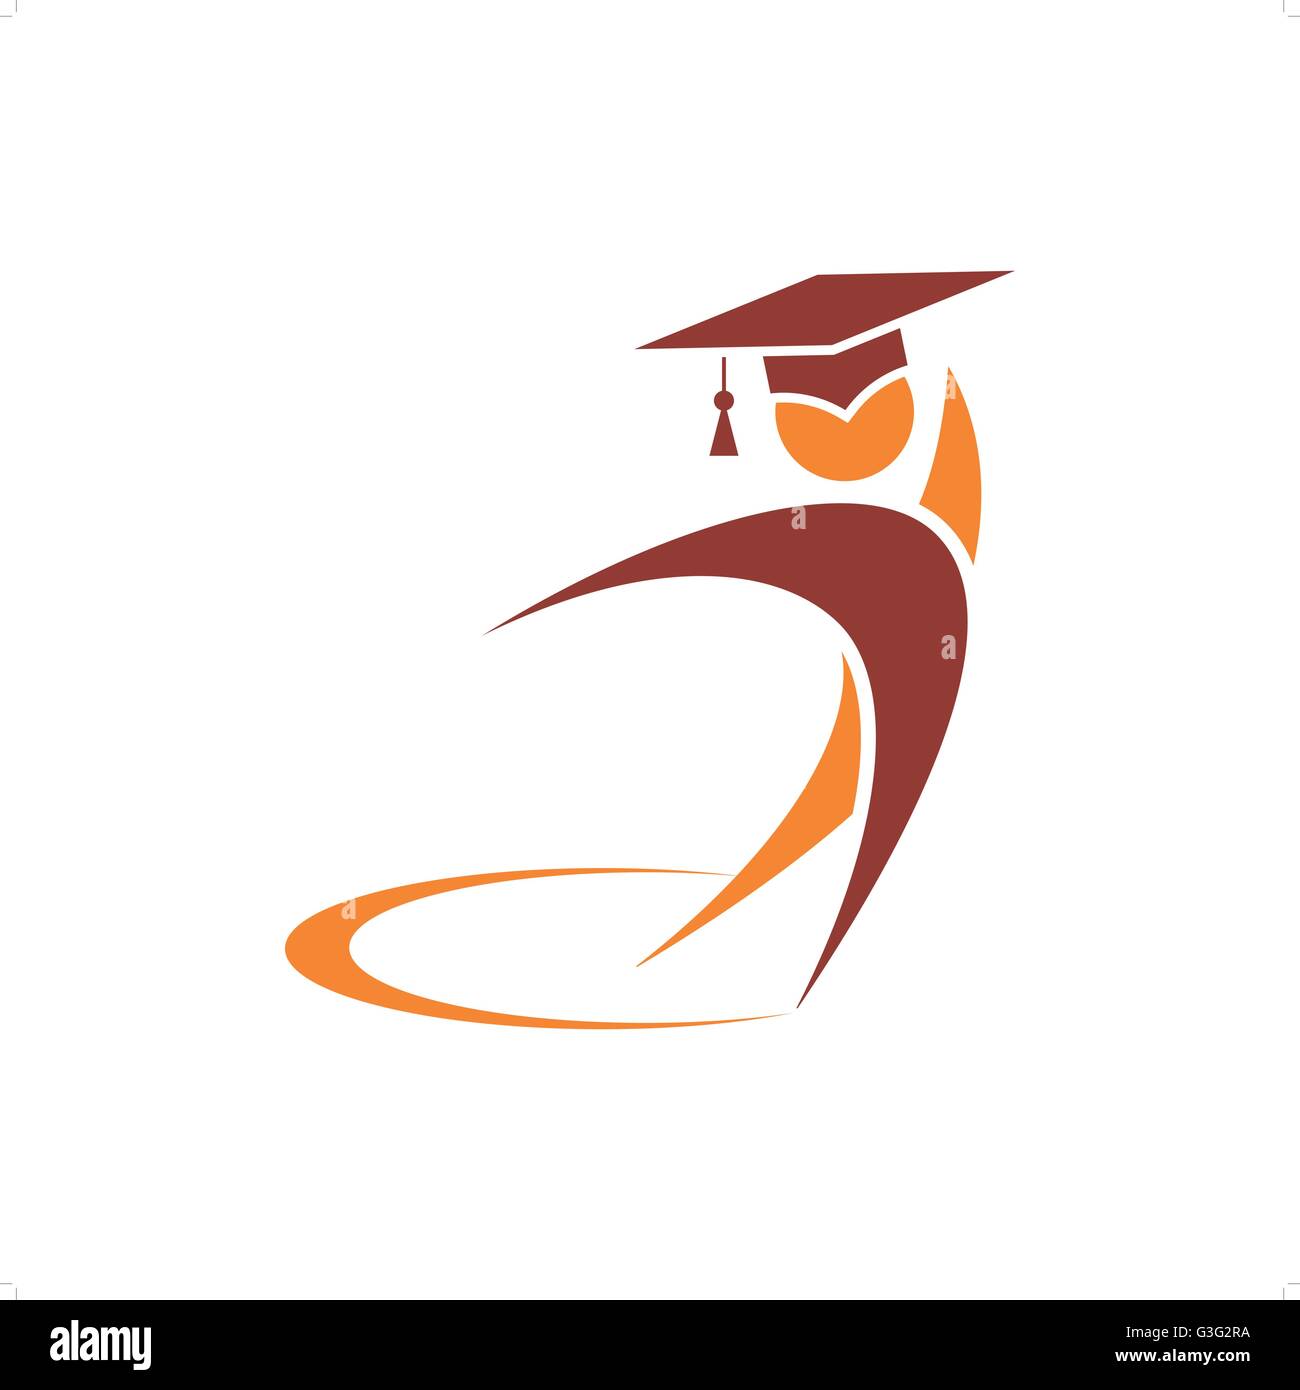 Stylized teacher symbol icon vector illustration isolated on white background. Stock Vector